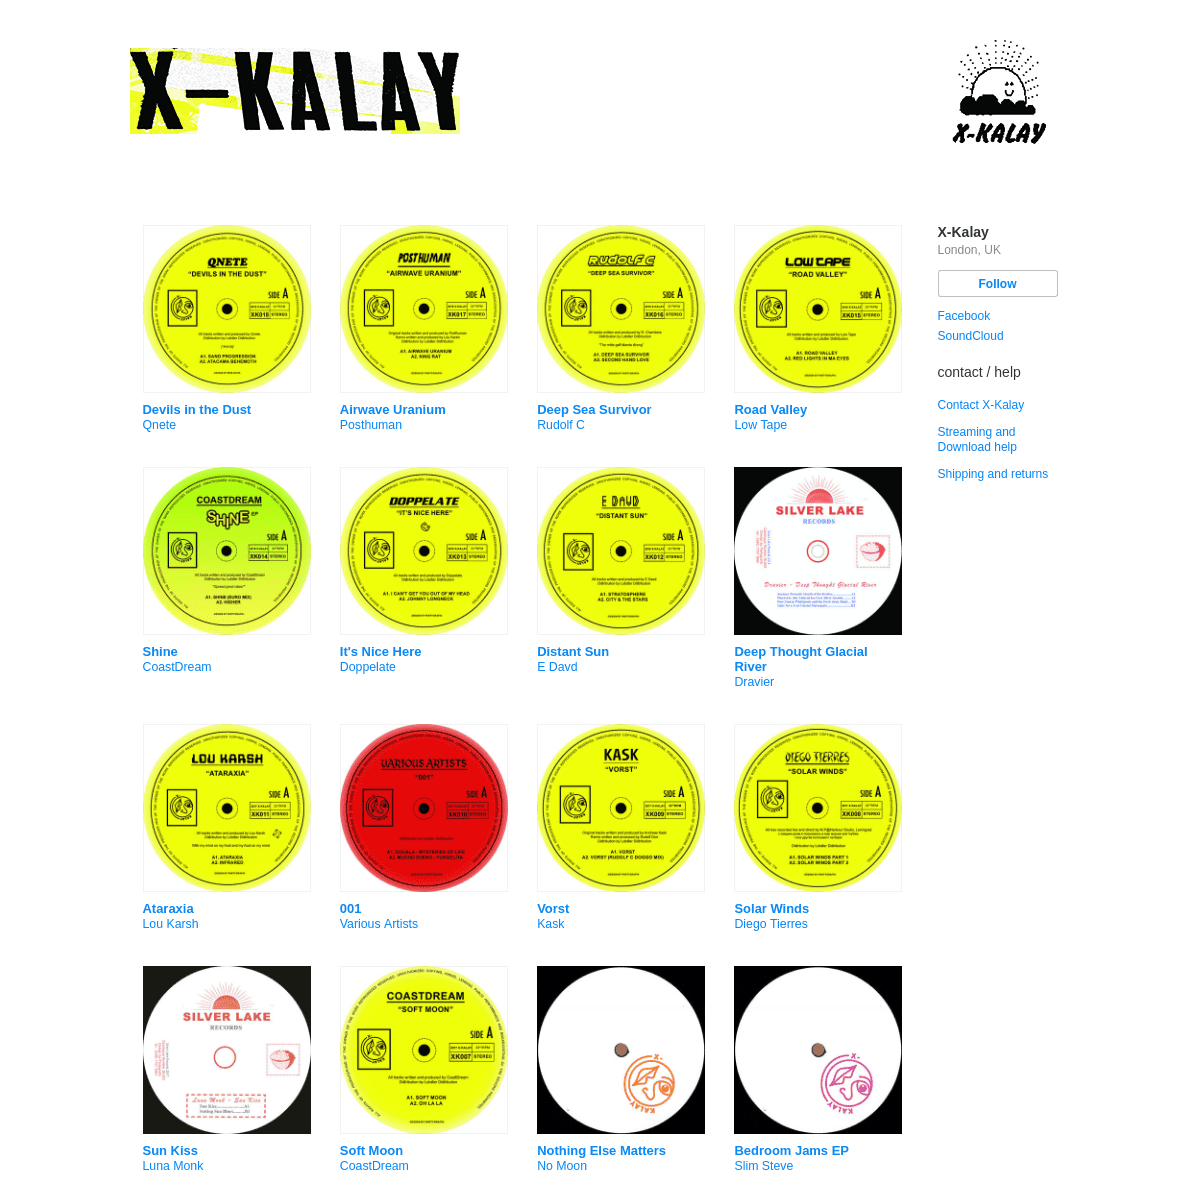 A complete backup of xkalay.com